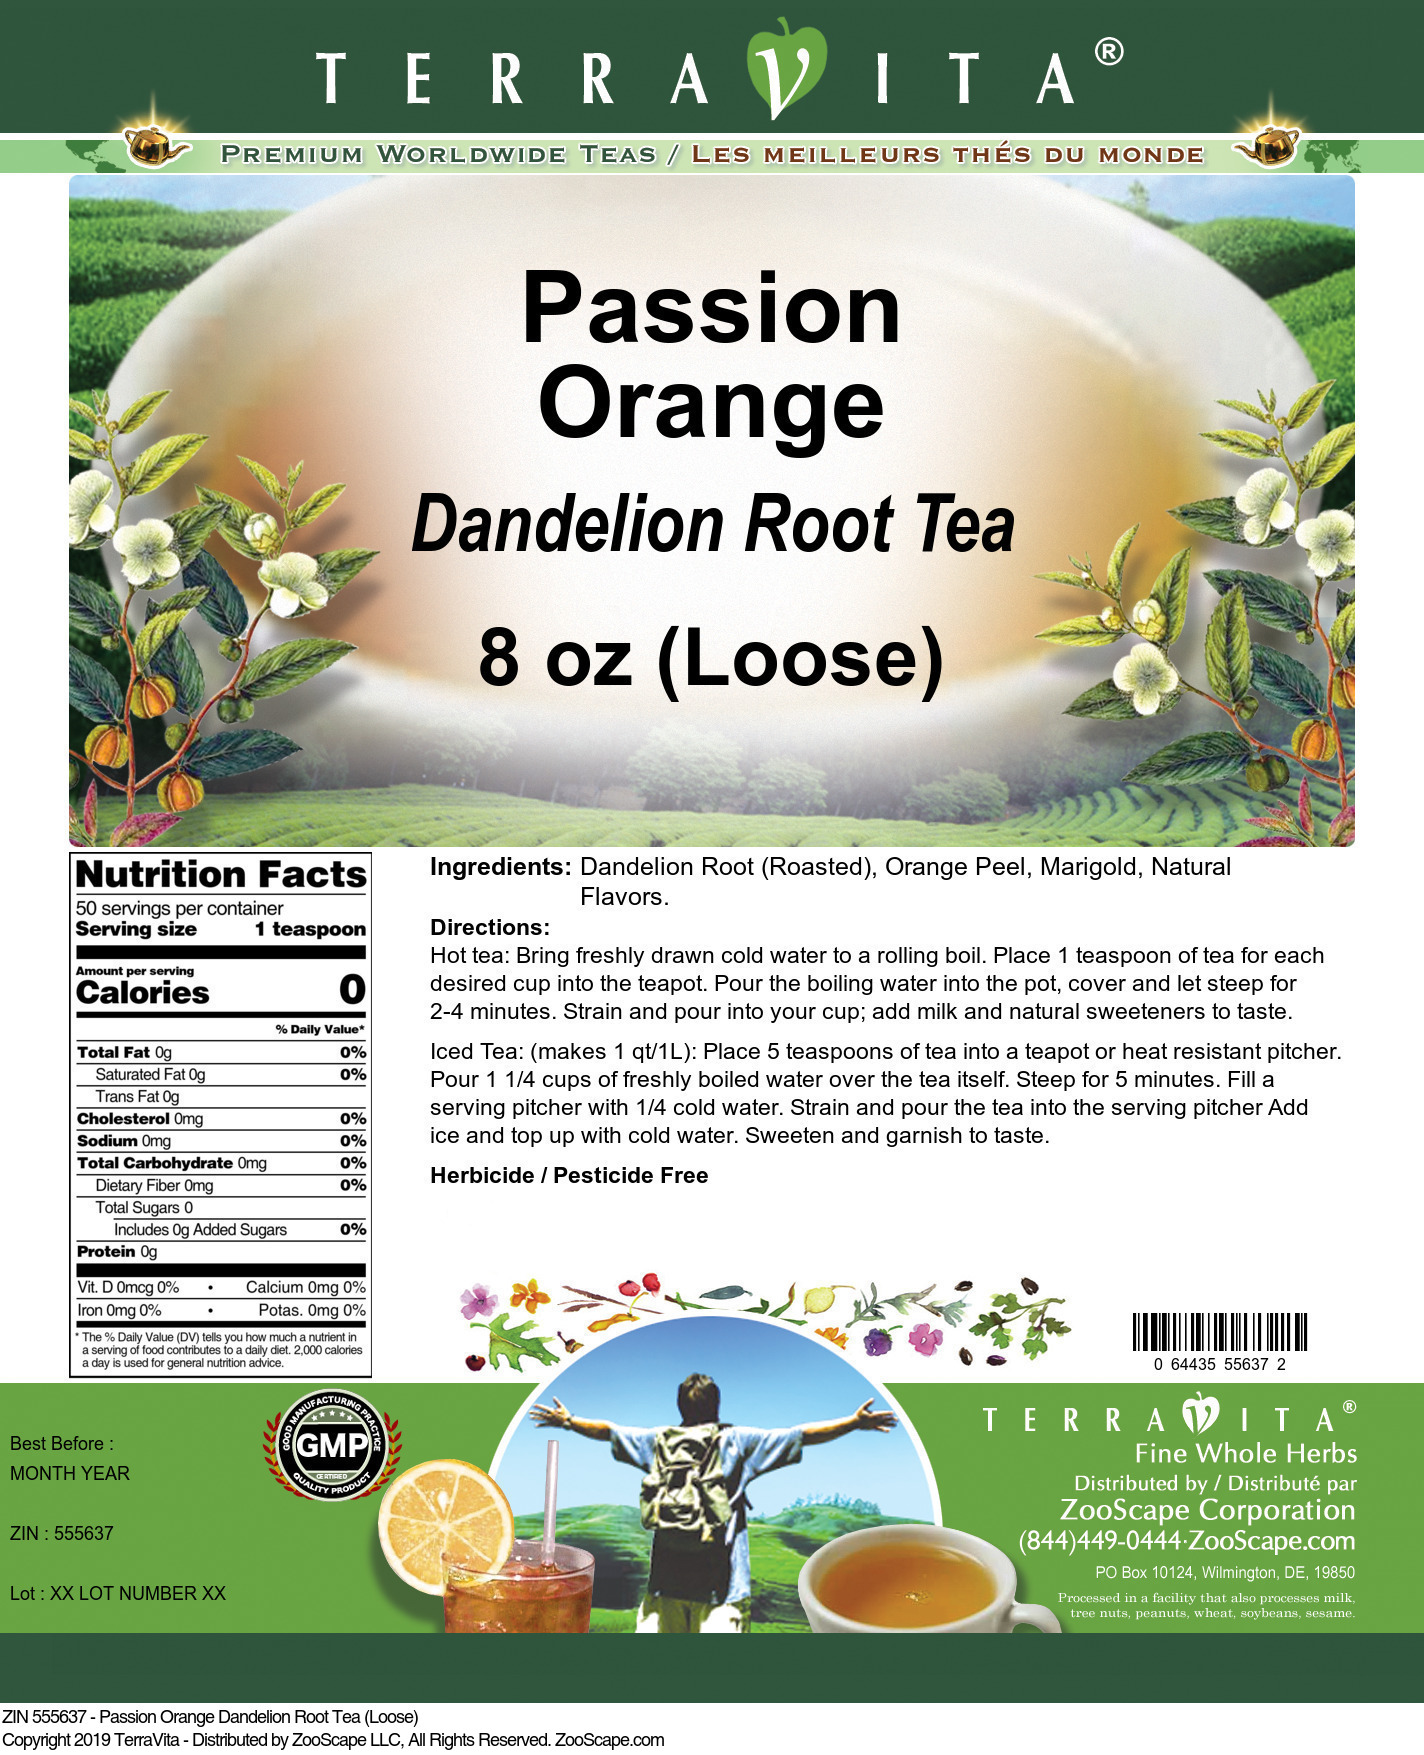 Passion Orange Dandelion Root Tea (Loose) - Label